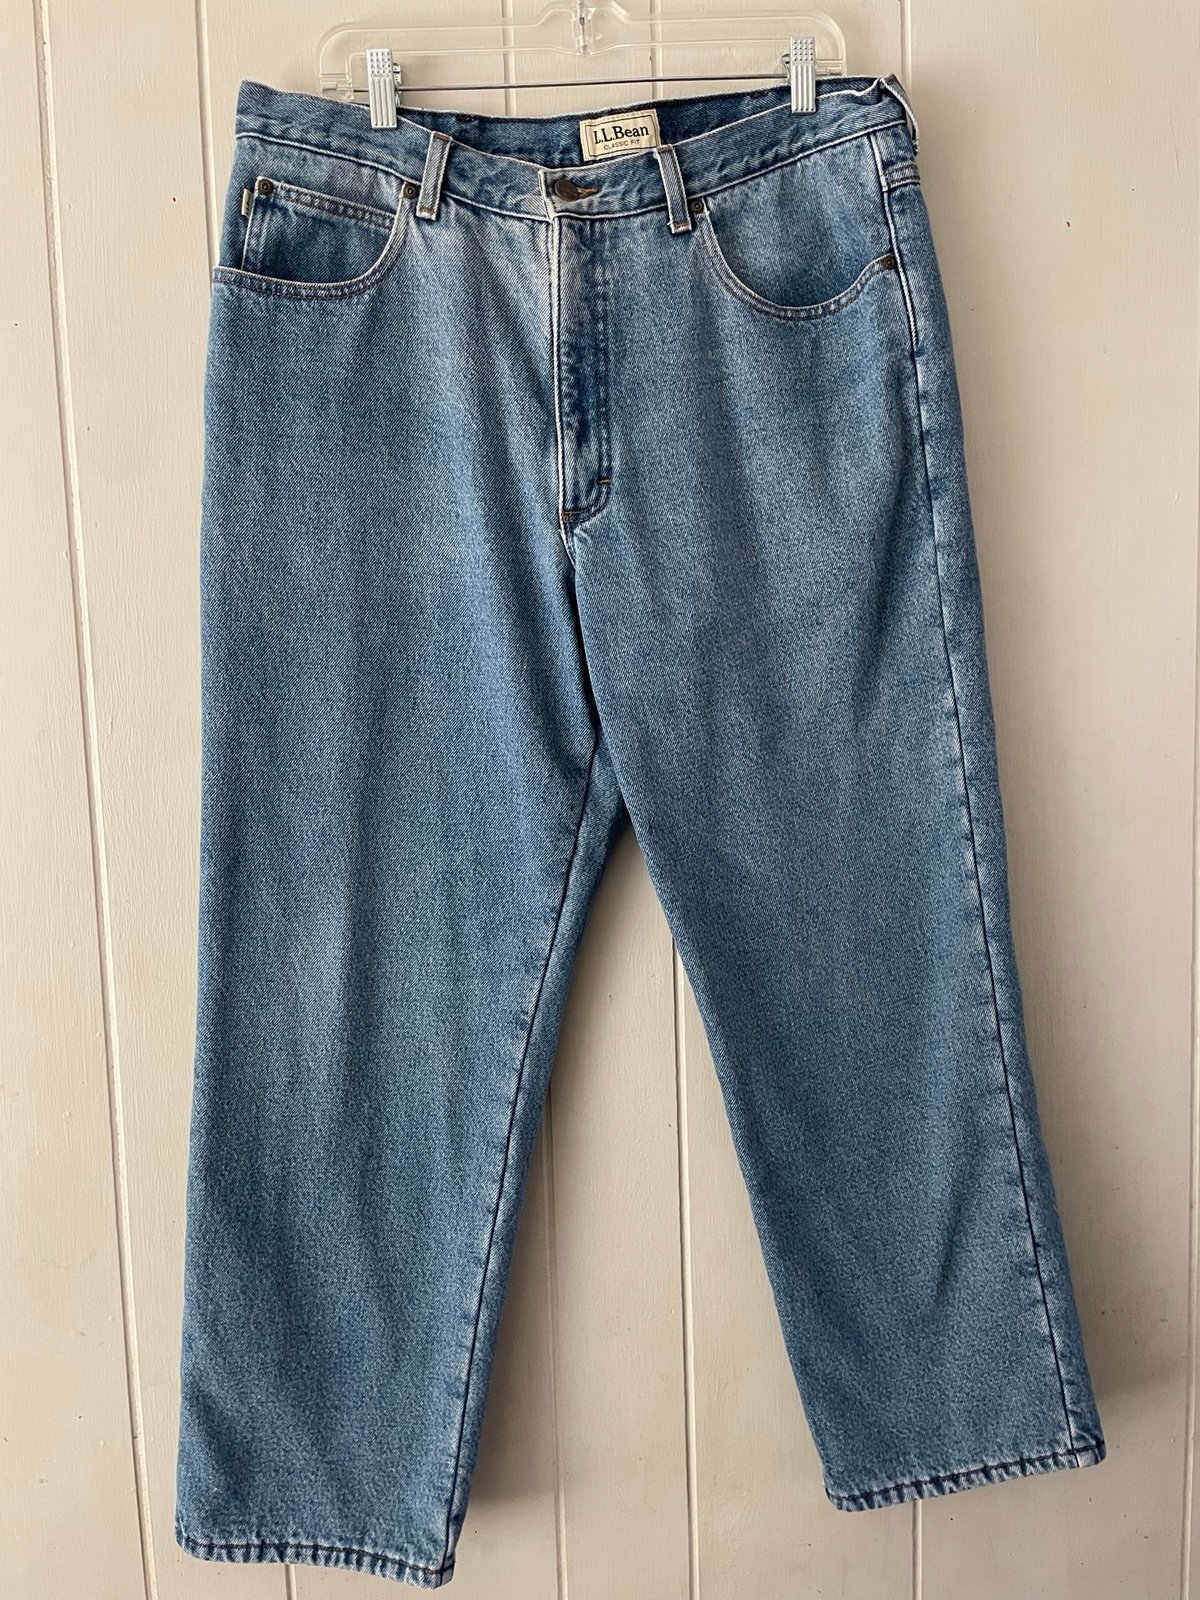 Elegant Vintage Classic Fit L.L. Bean Fleece Lined Jean